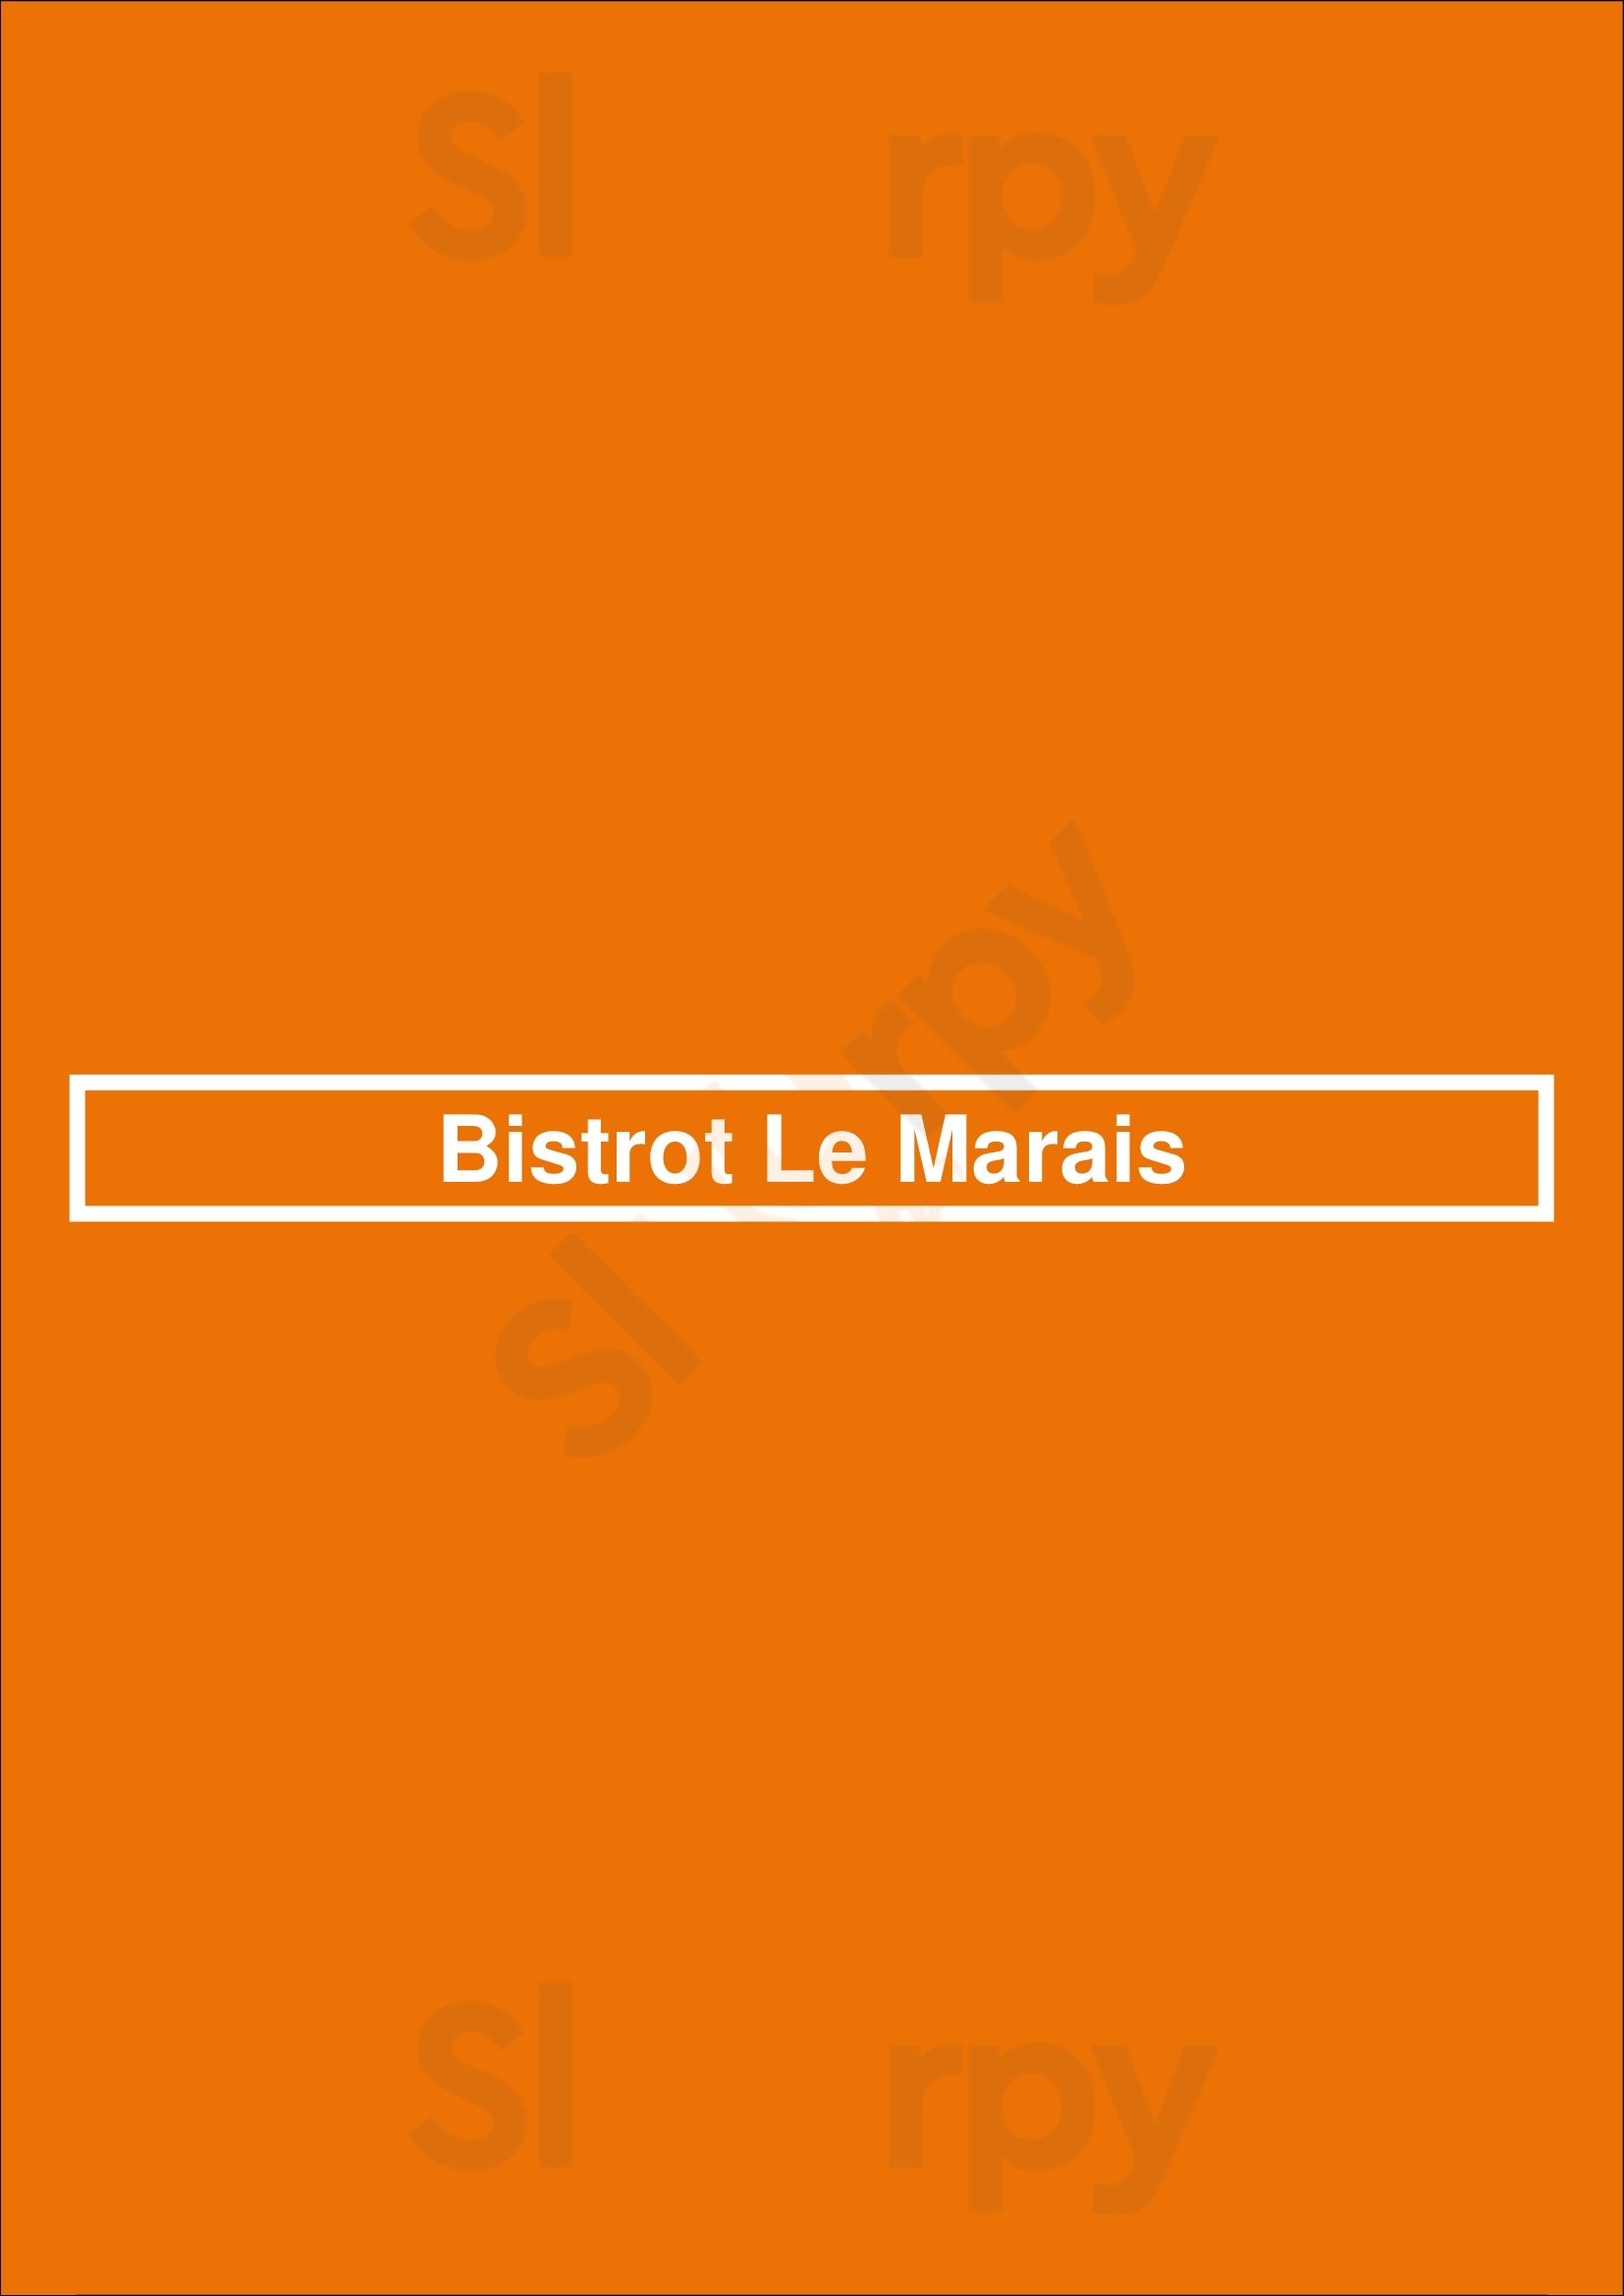 Bistrot Le Marais Maassluis Menu - 1